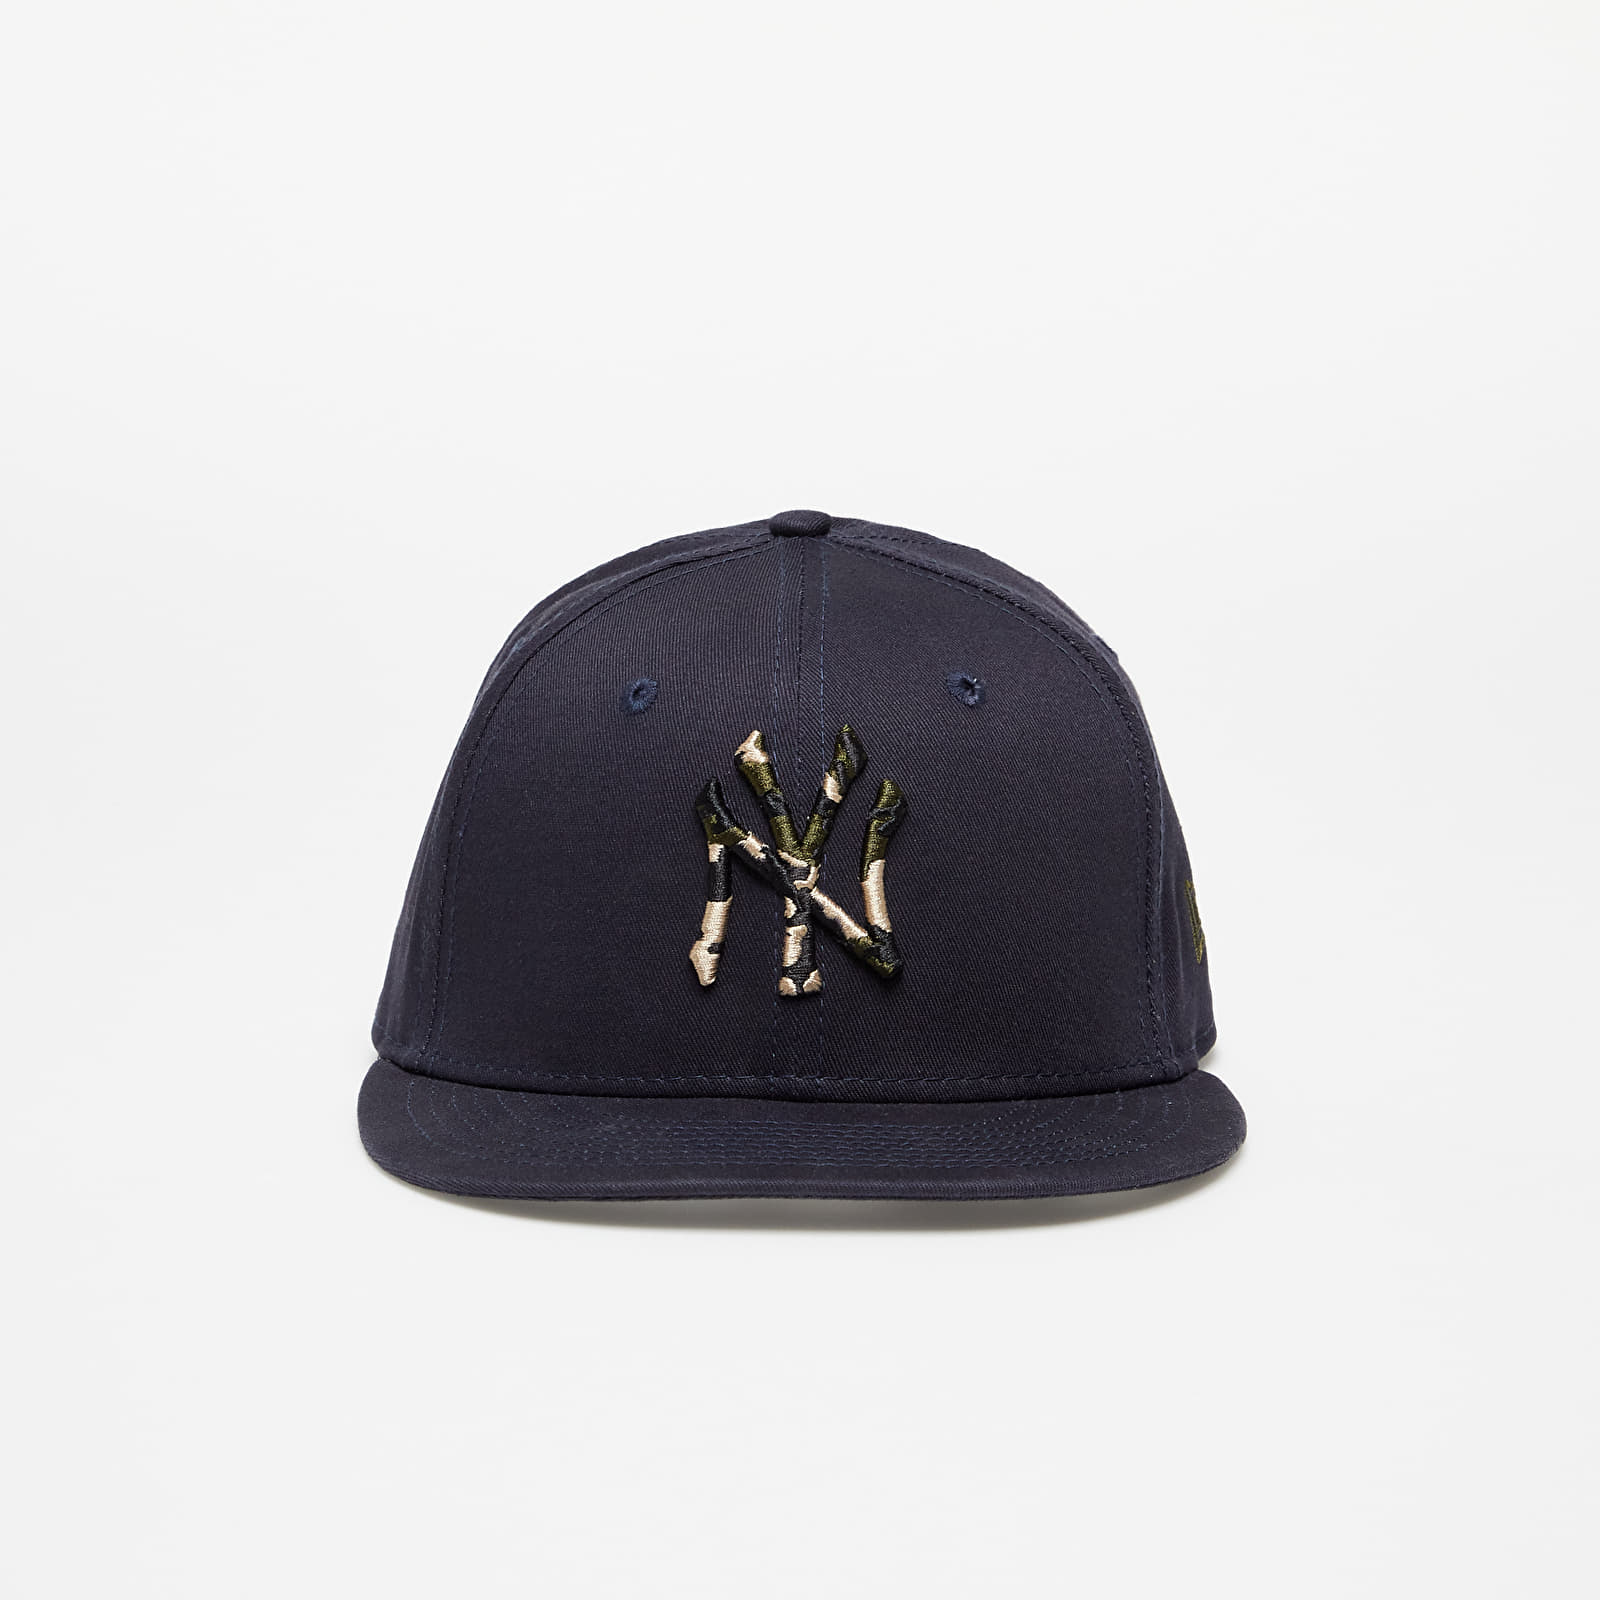 Caps New Era New York Yankees Camo Infill 9FIFTY Snapback Cap Navy